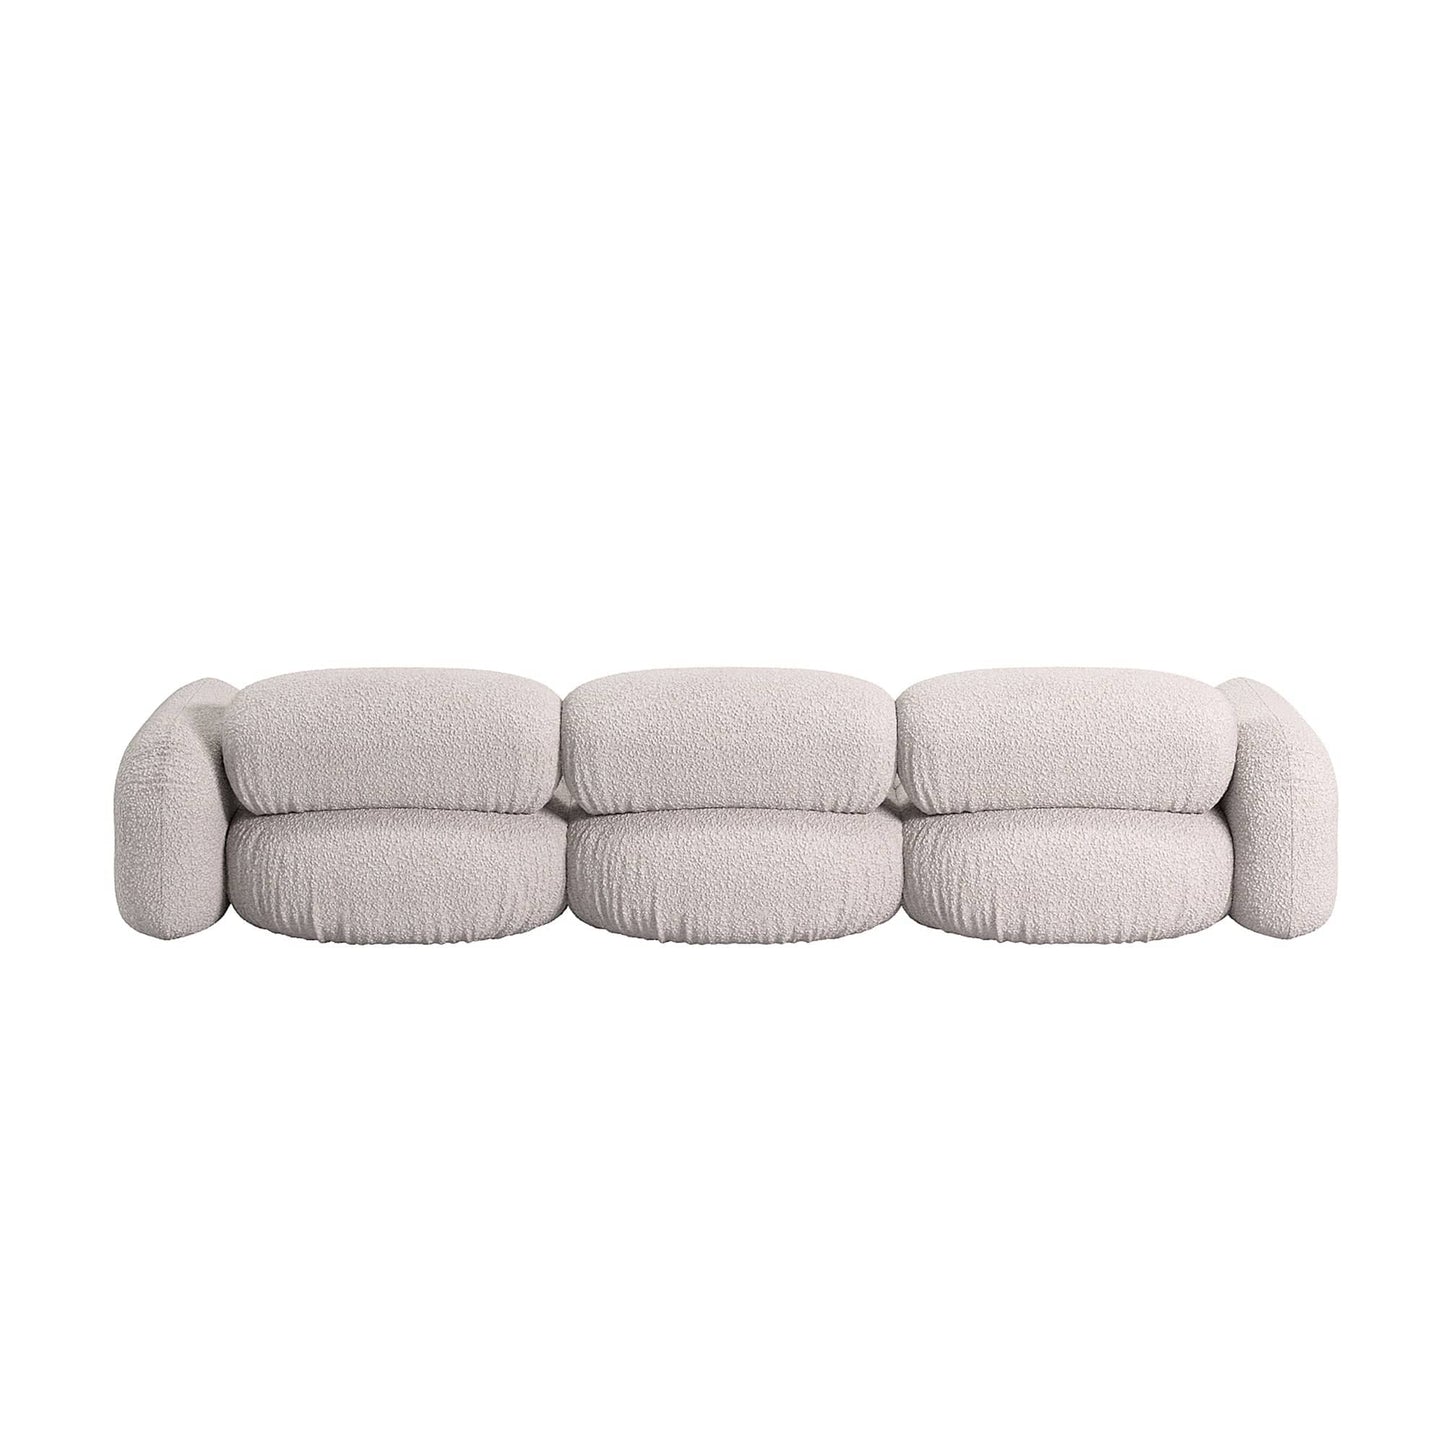 Ondo 4 Seater Sofa - Maya Cream Boucle